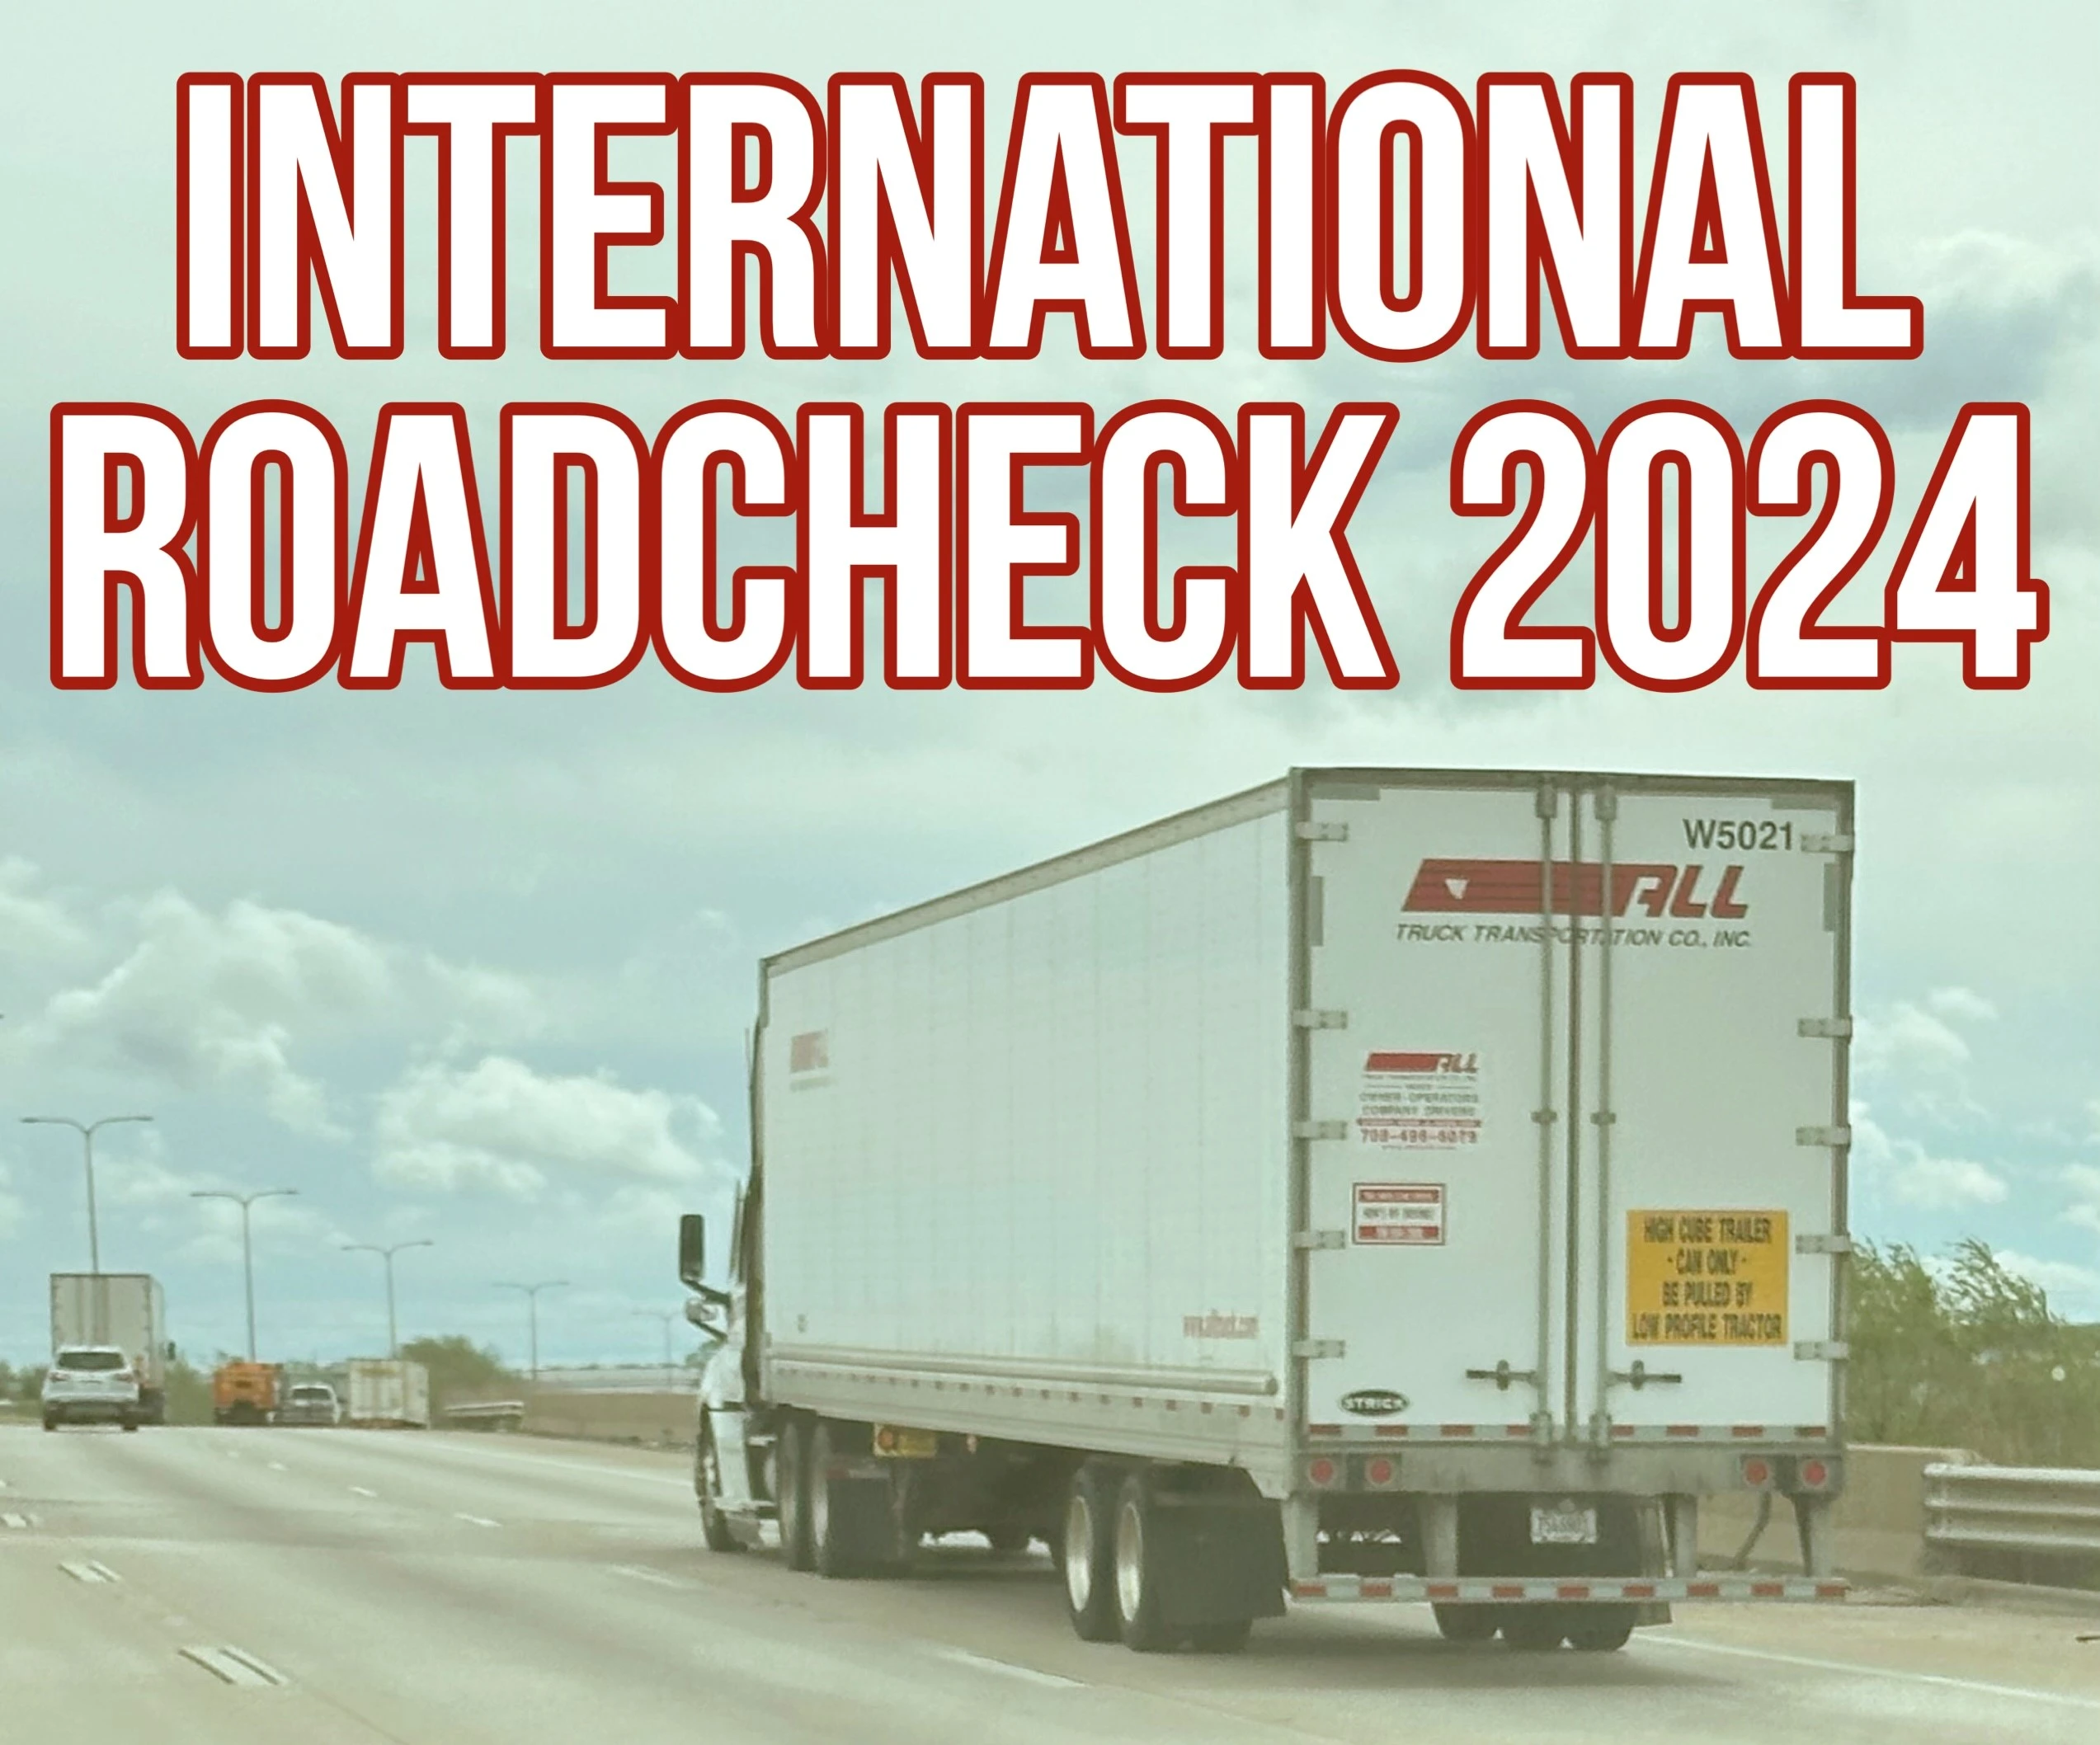 Road Check 2024